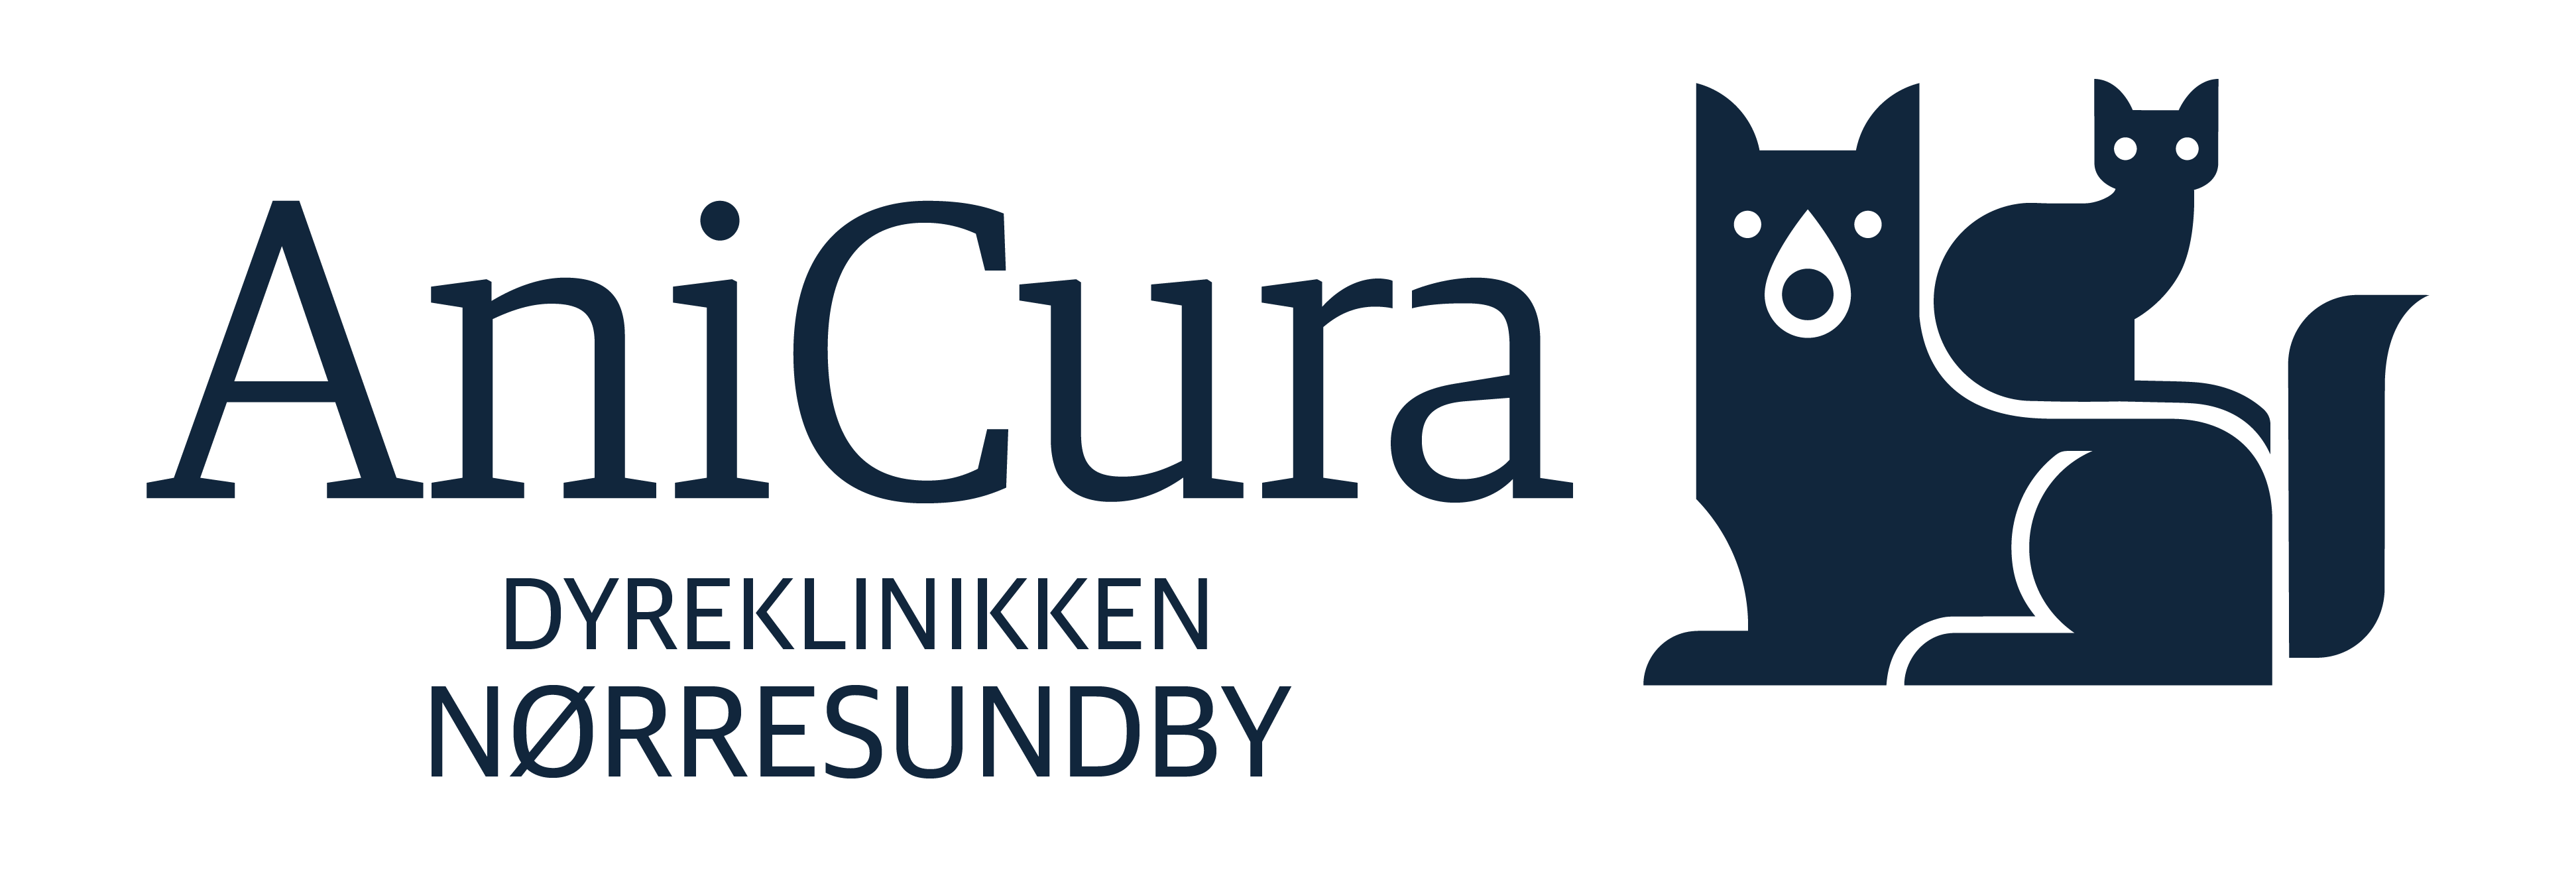 AniCura Dyreklinikken Nørresundby logo